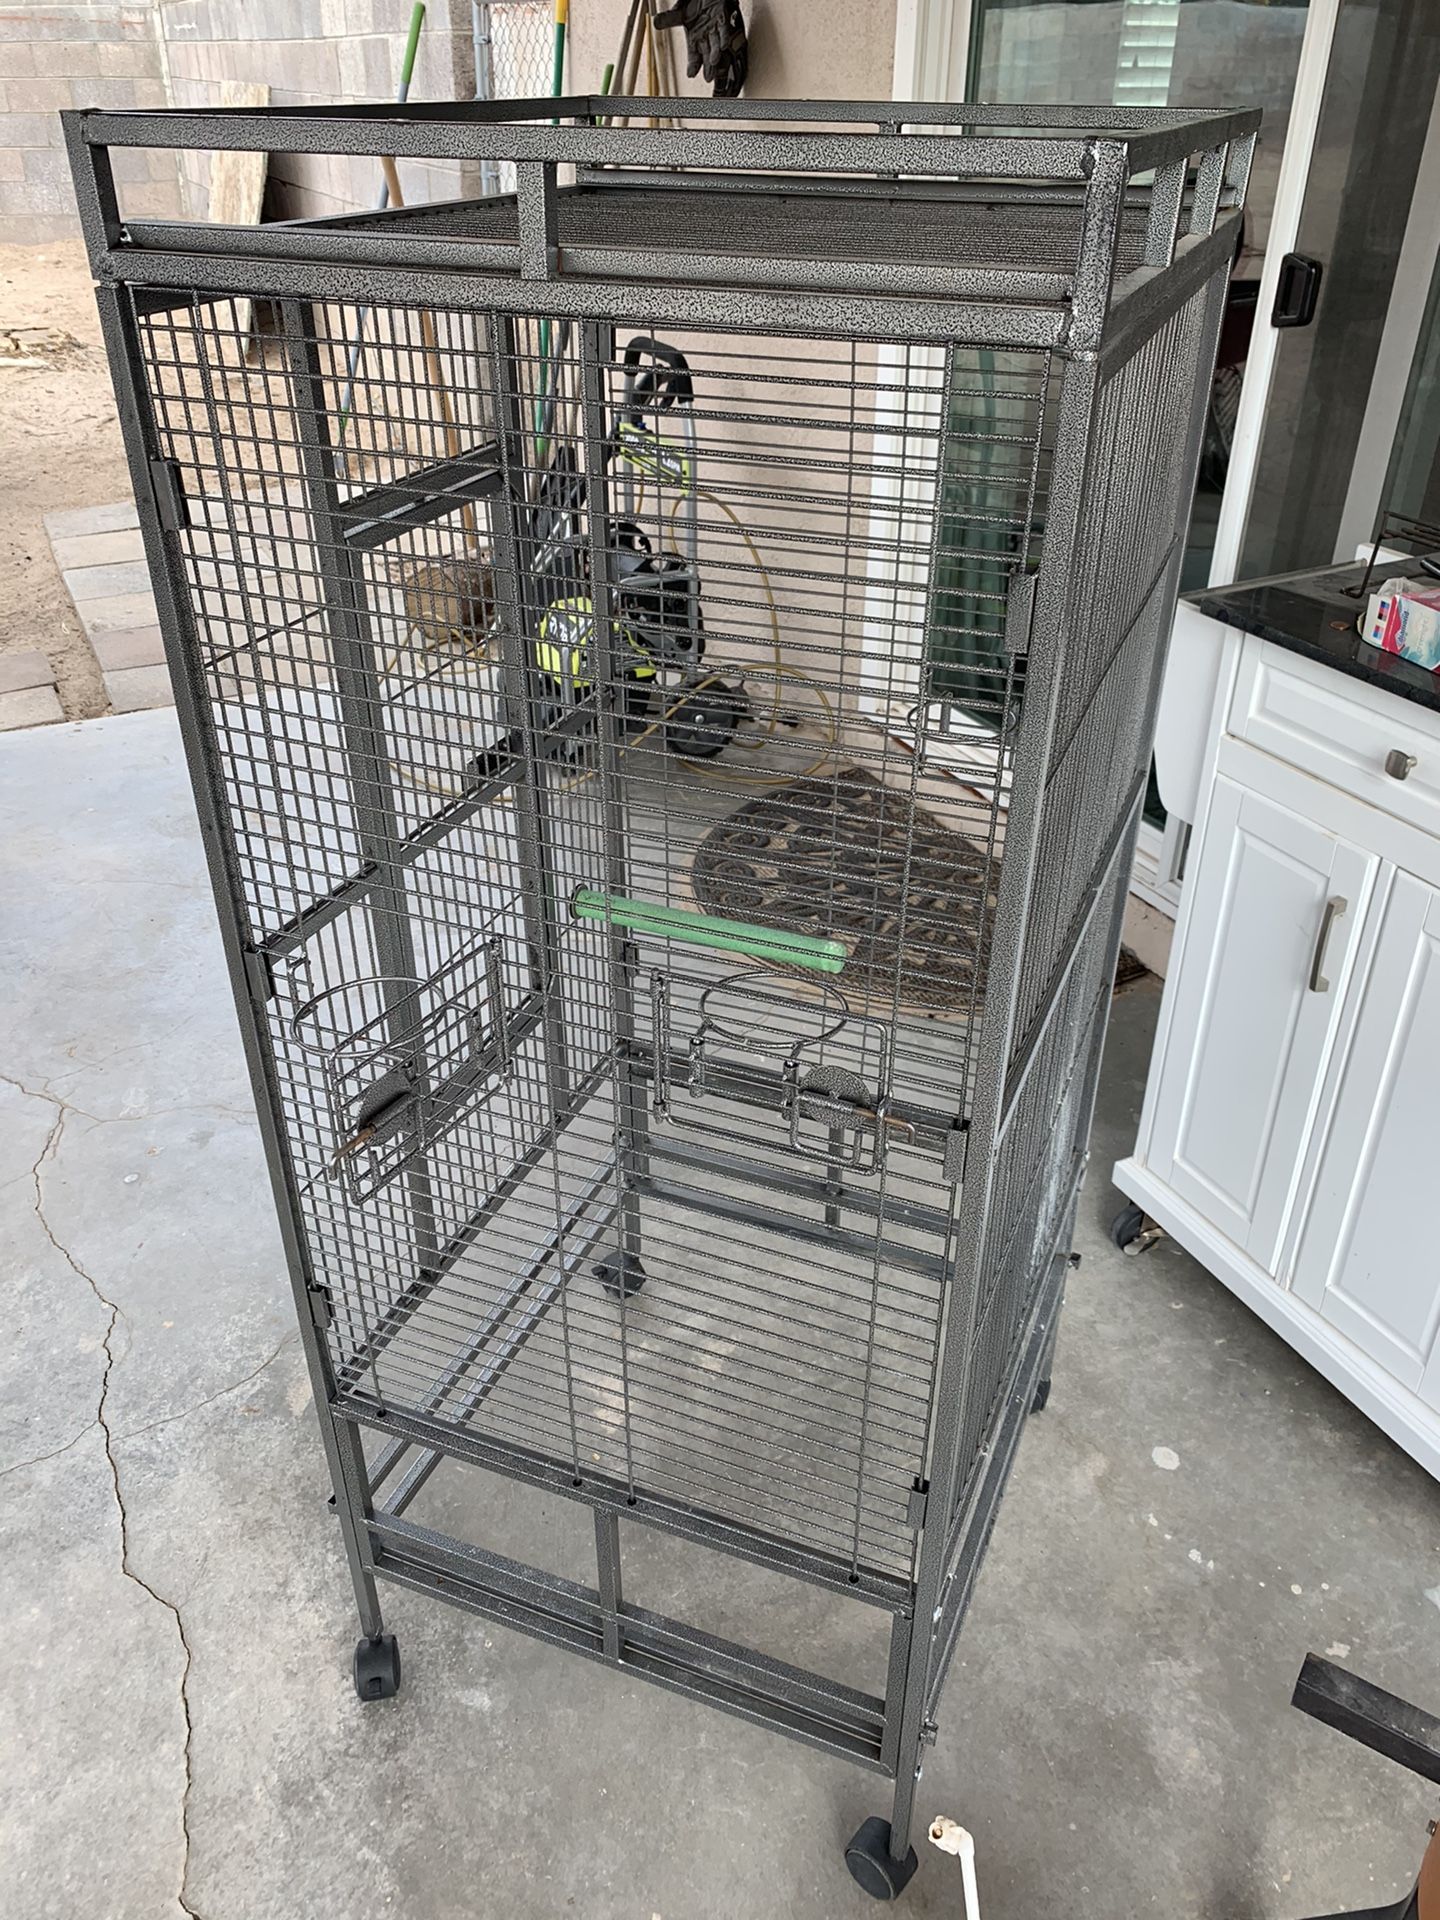 Medium bird cage